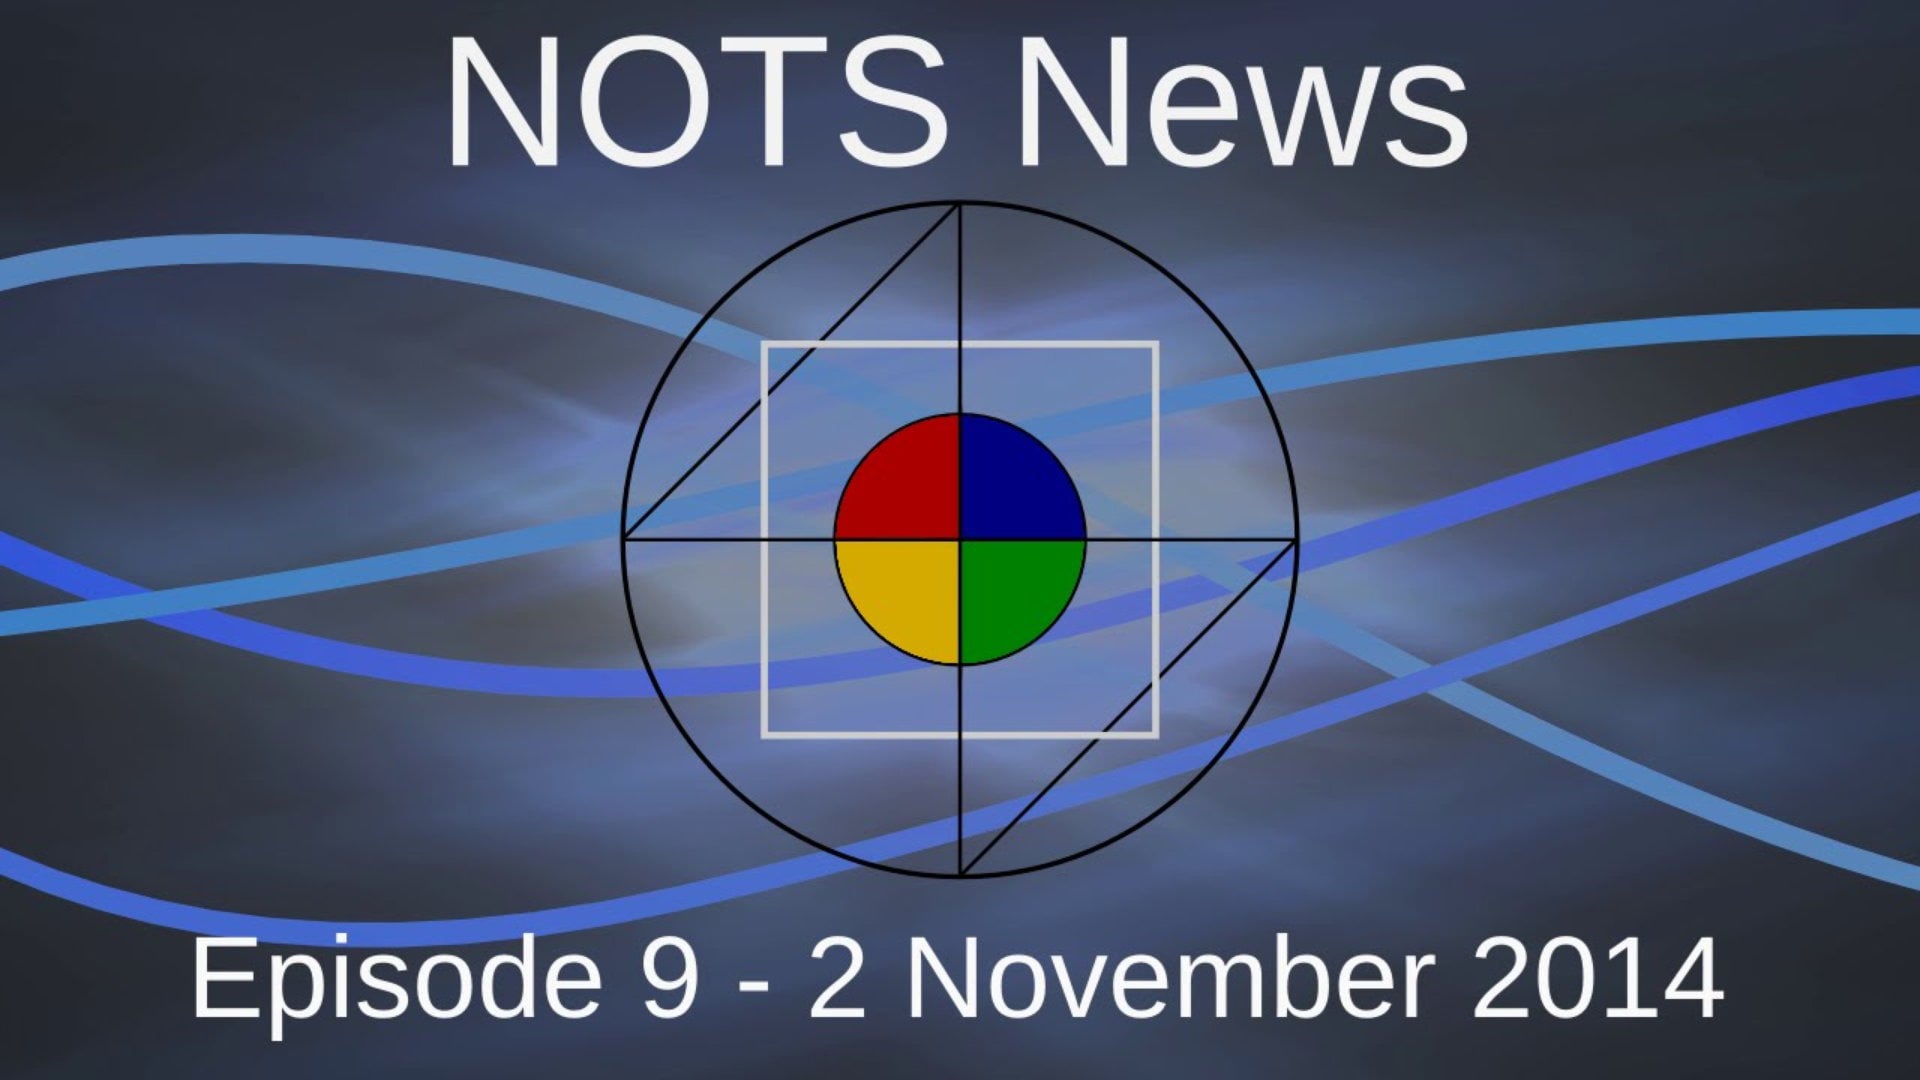 2 November 2014 - NOTS News